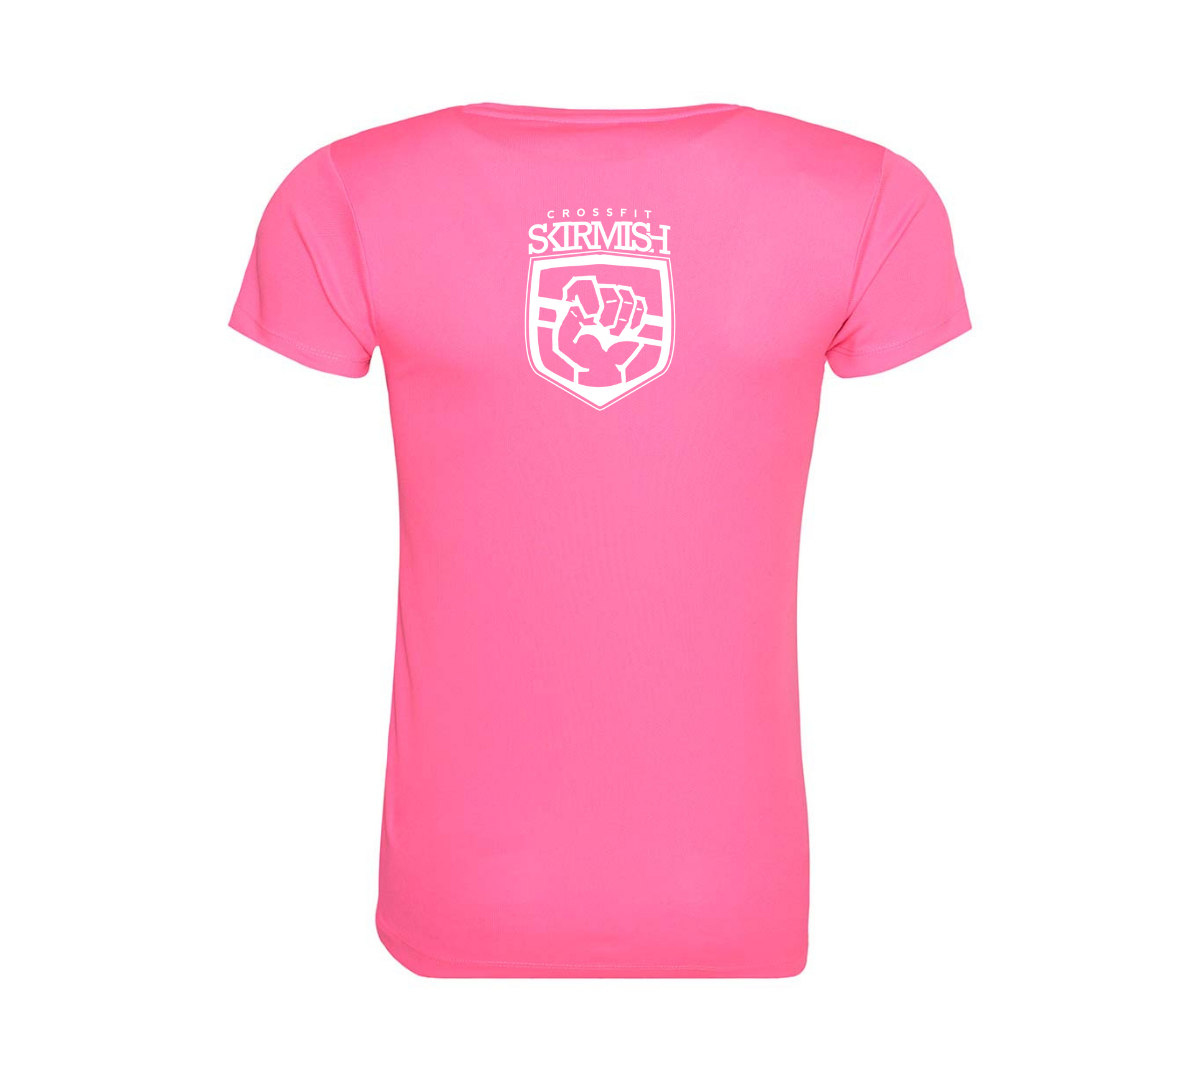 CrossFit Skirmish Ladies Training T-Shirts